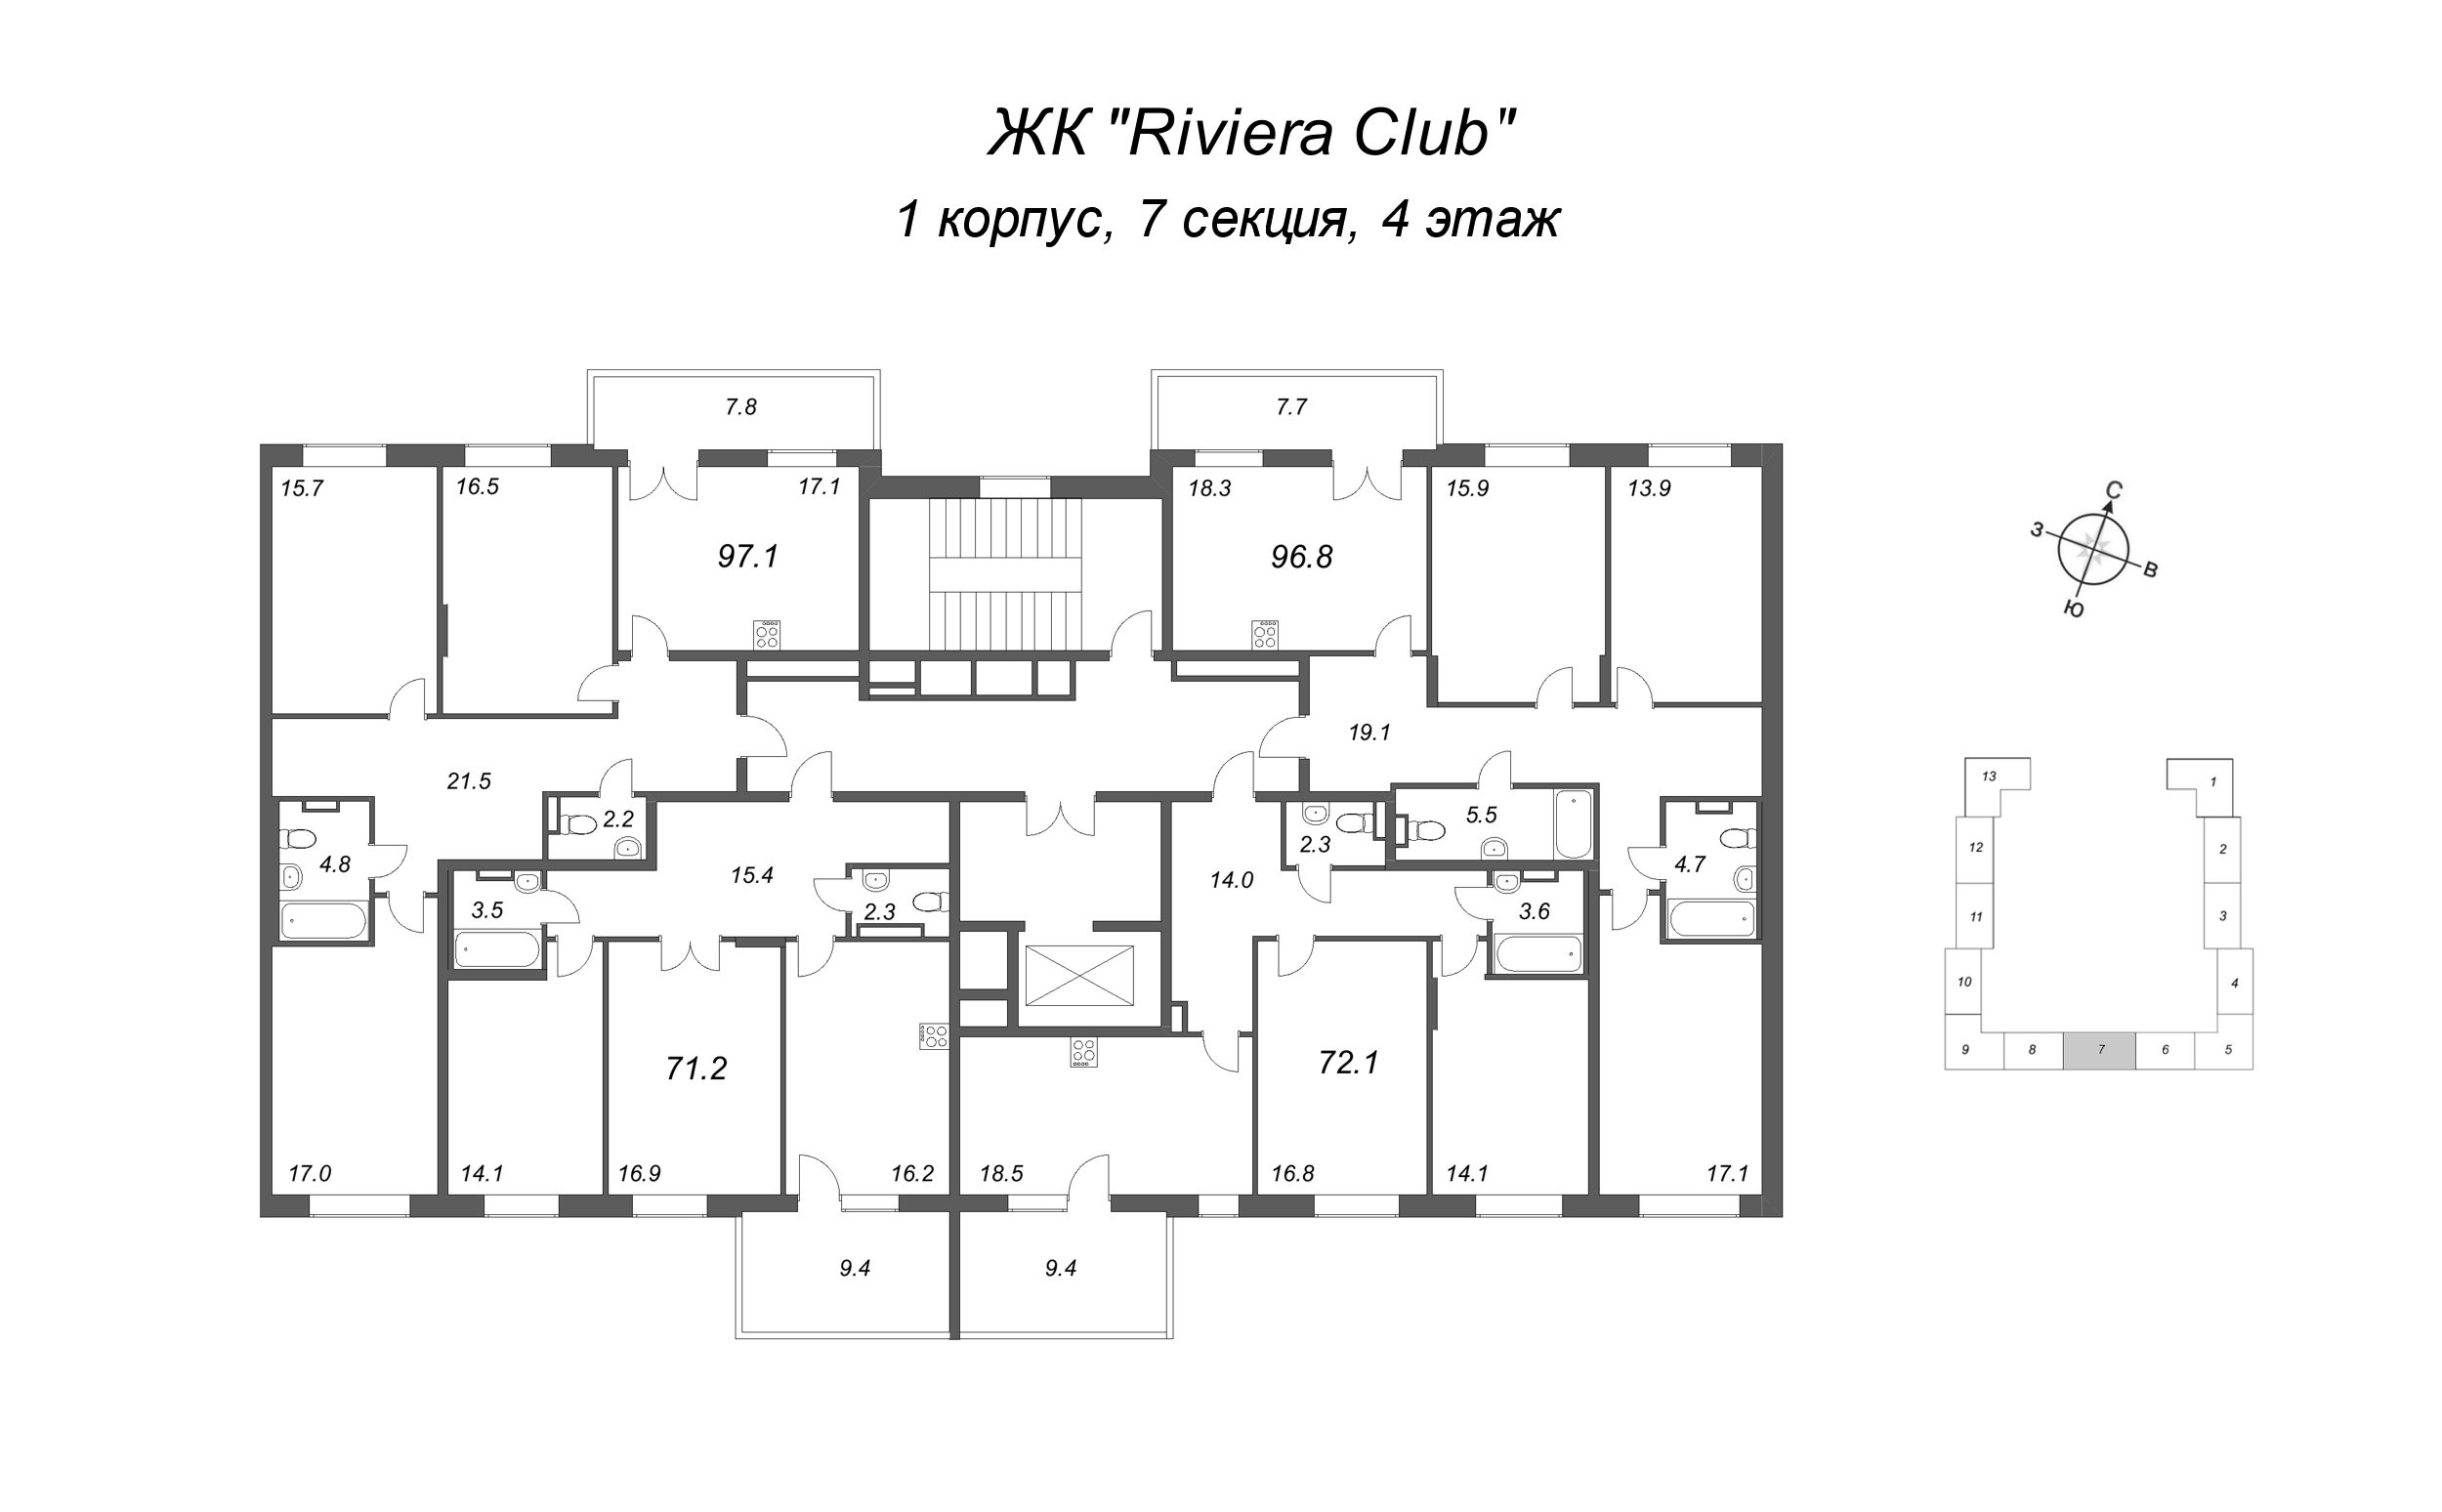 3-комнатная (Евро) квартира, 72.1 м² в ЖК "Riviera Club" - планировка этажа